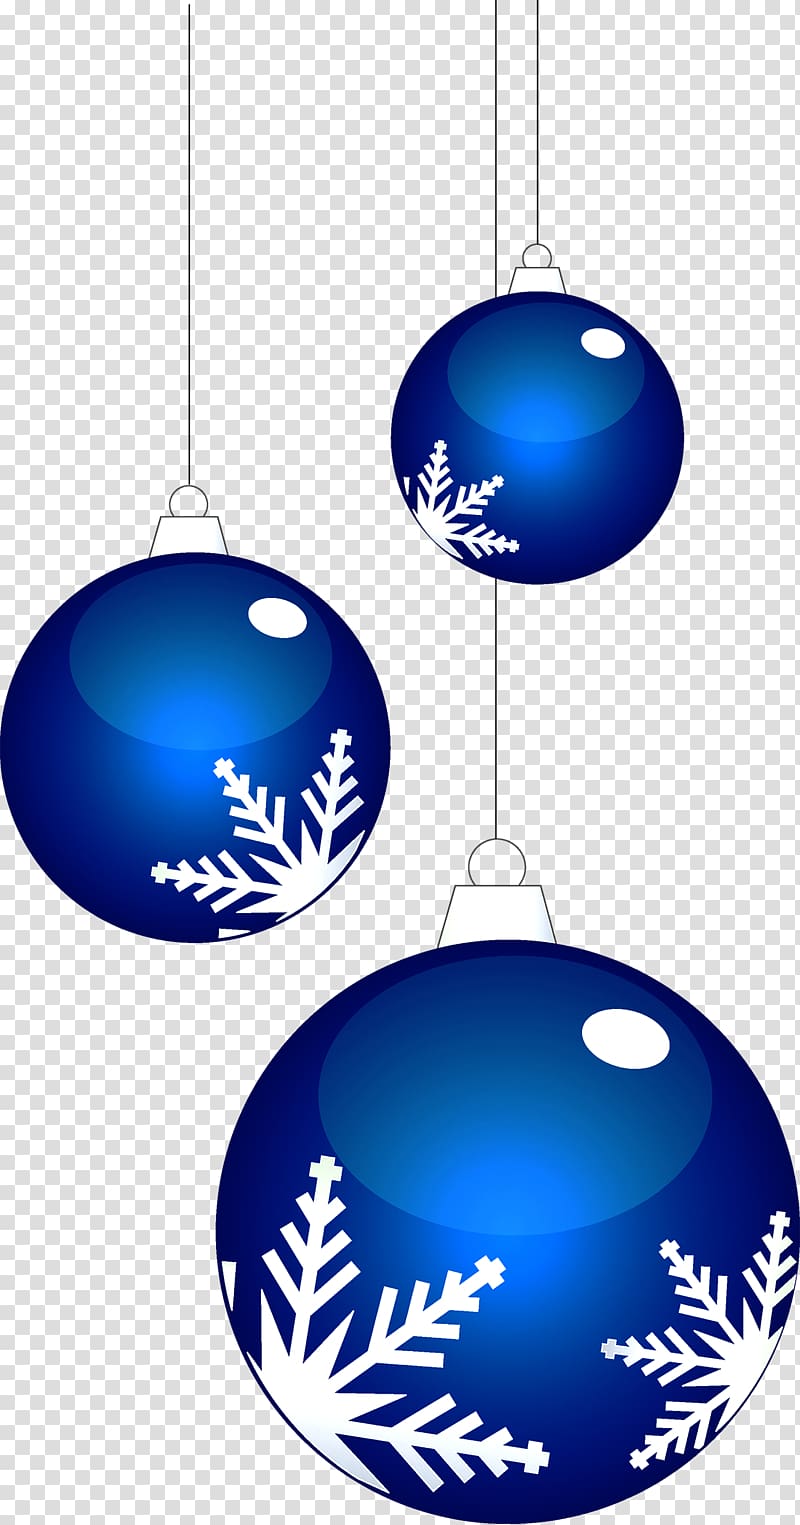 Christmas balls transparent background PNG clipart